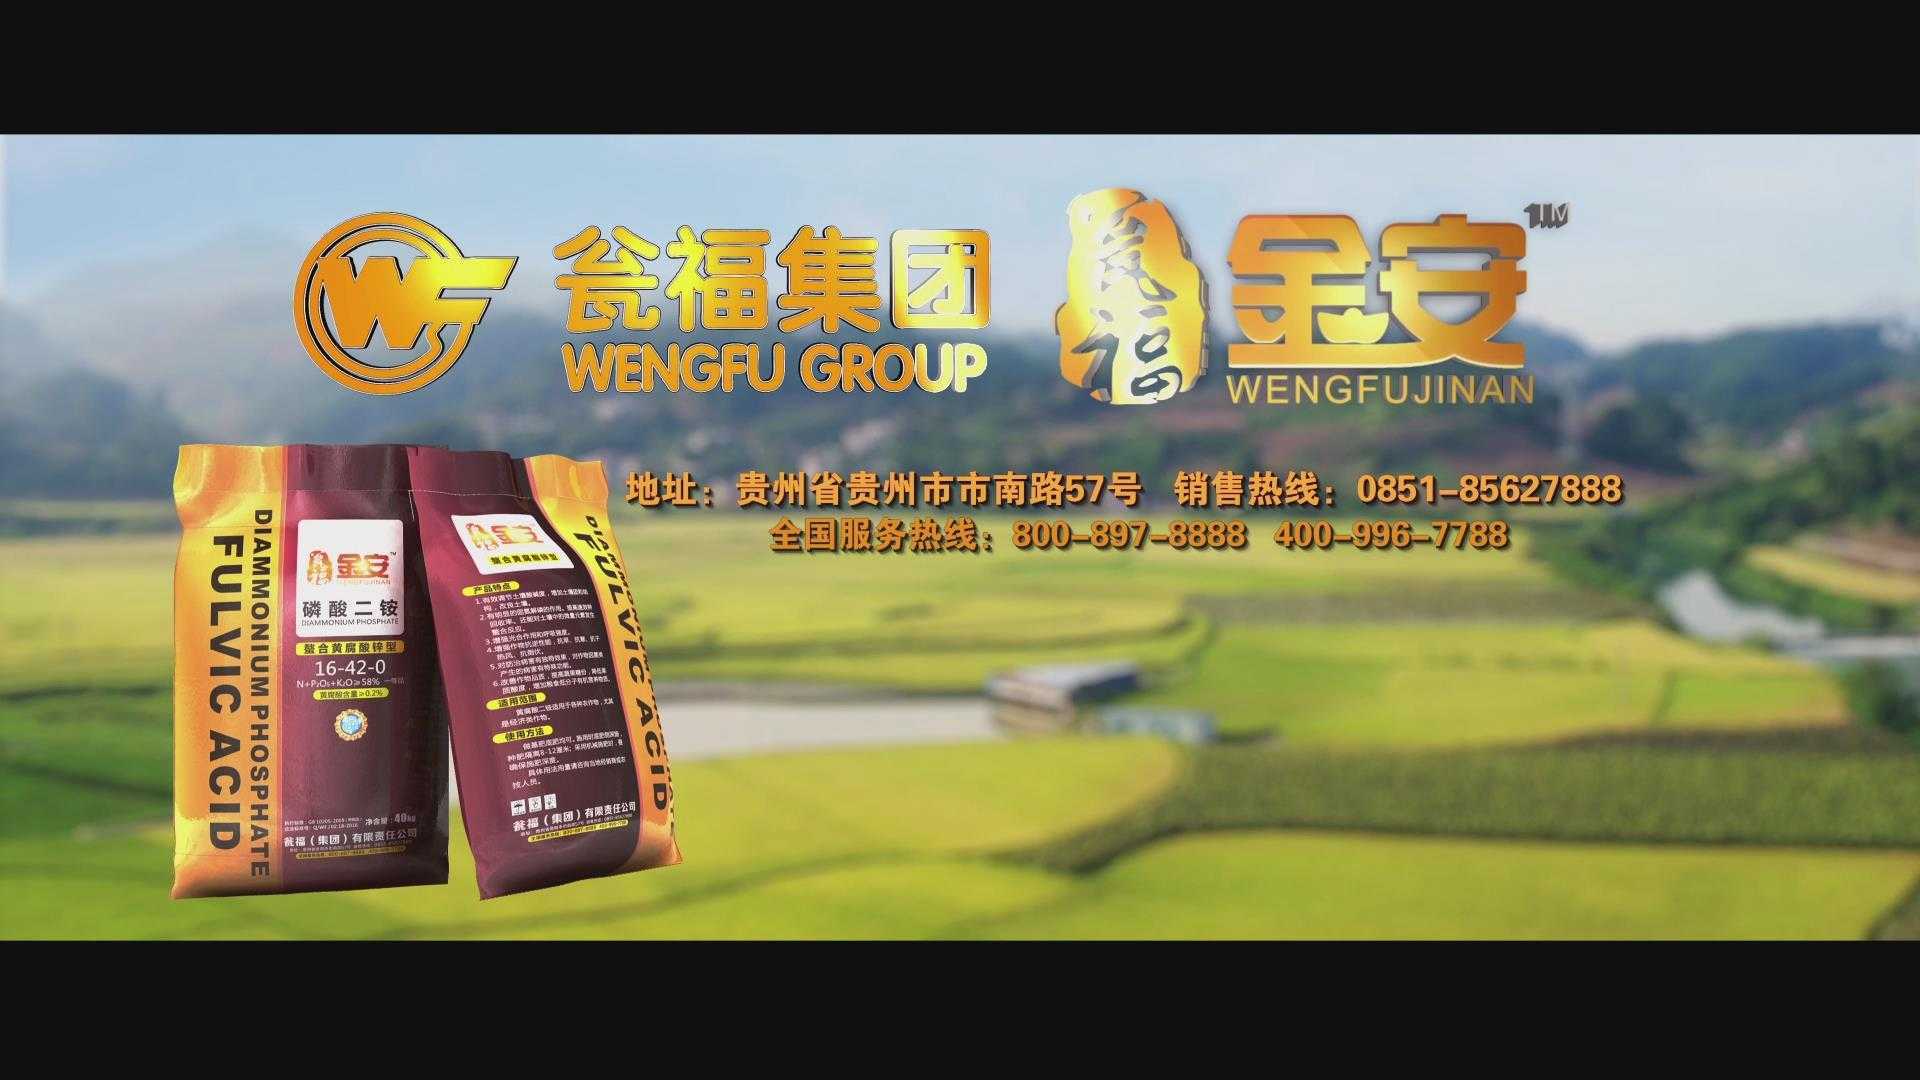 CCTV７农业频道－金安化肥广告片